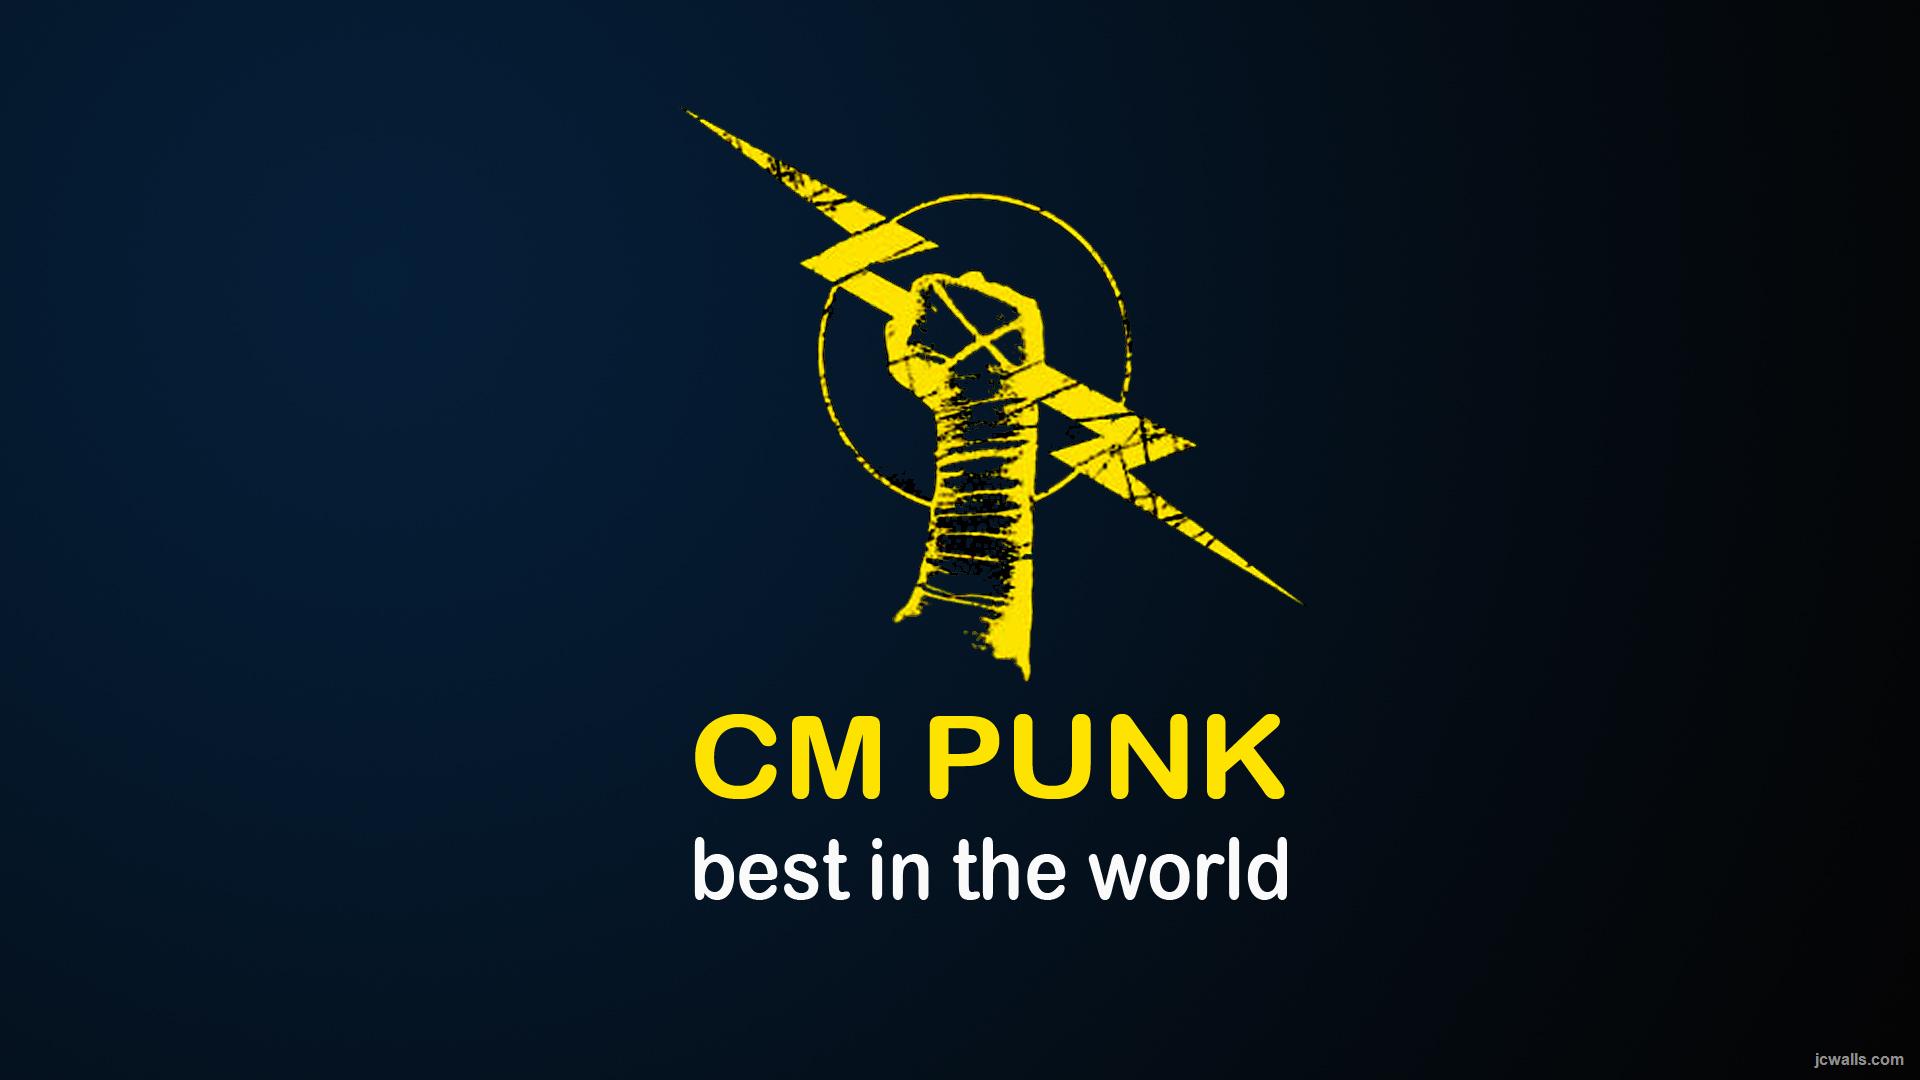 cm punk logo wallpaper #19